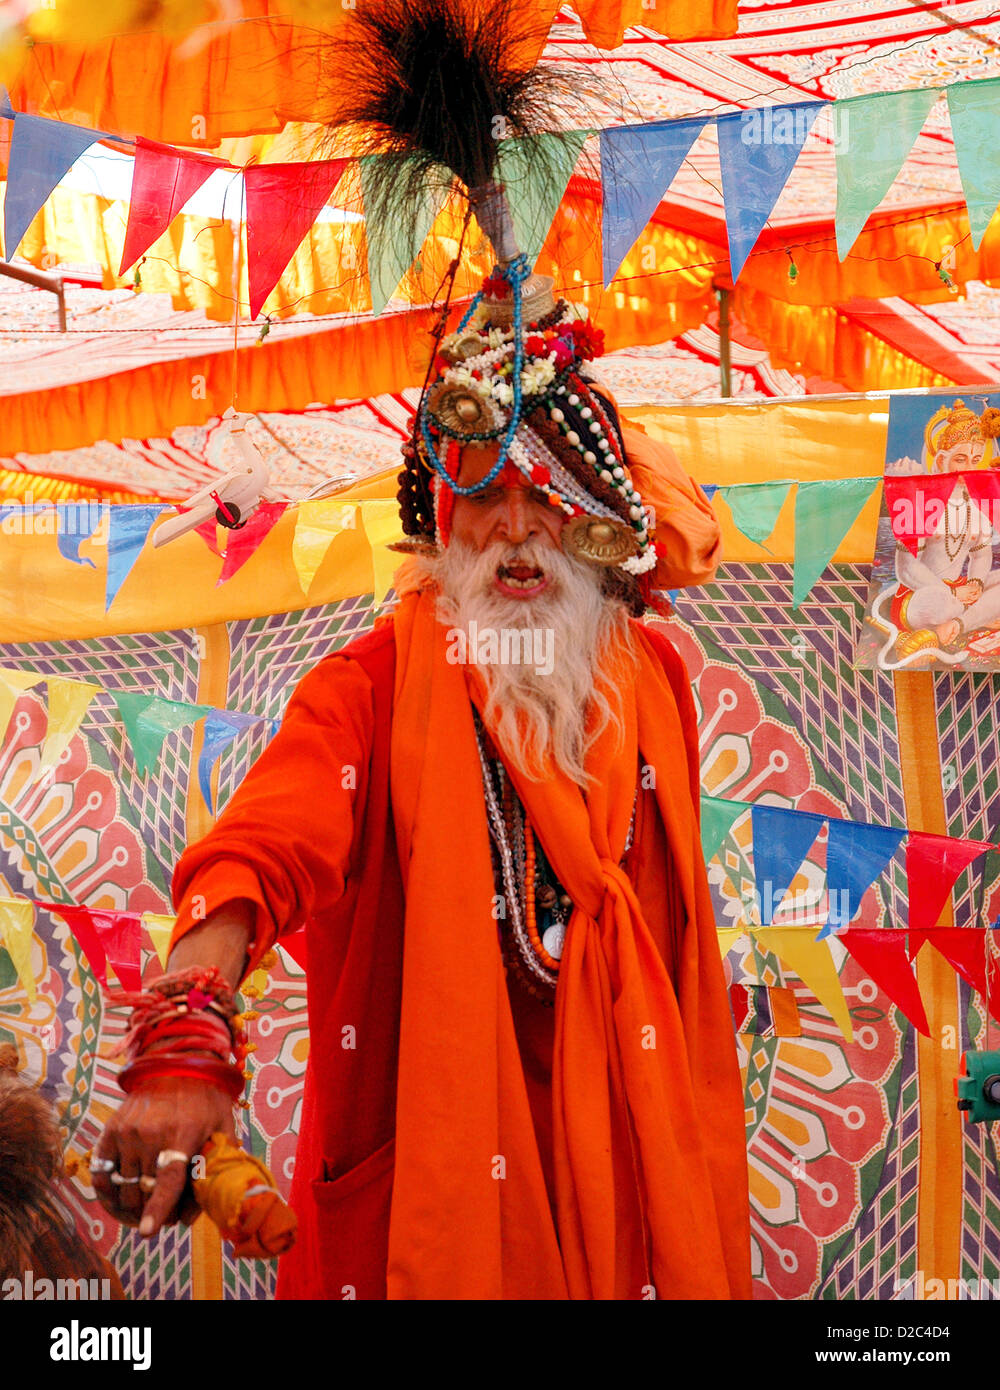 Prêtre indien Sadhu danser et chanter des chants religieux Bhajan Inde Banque D'Images